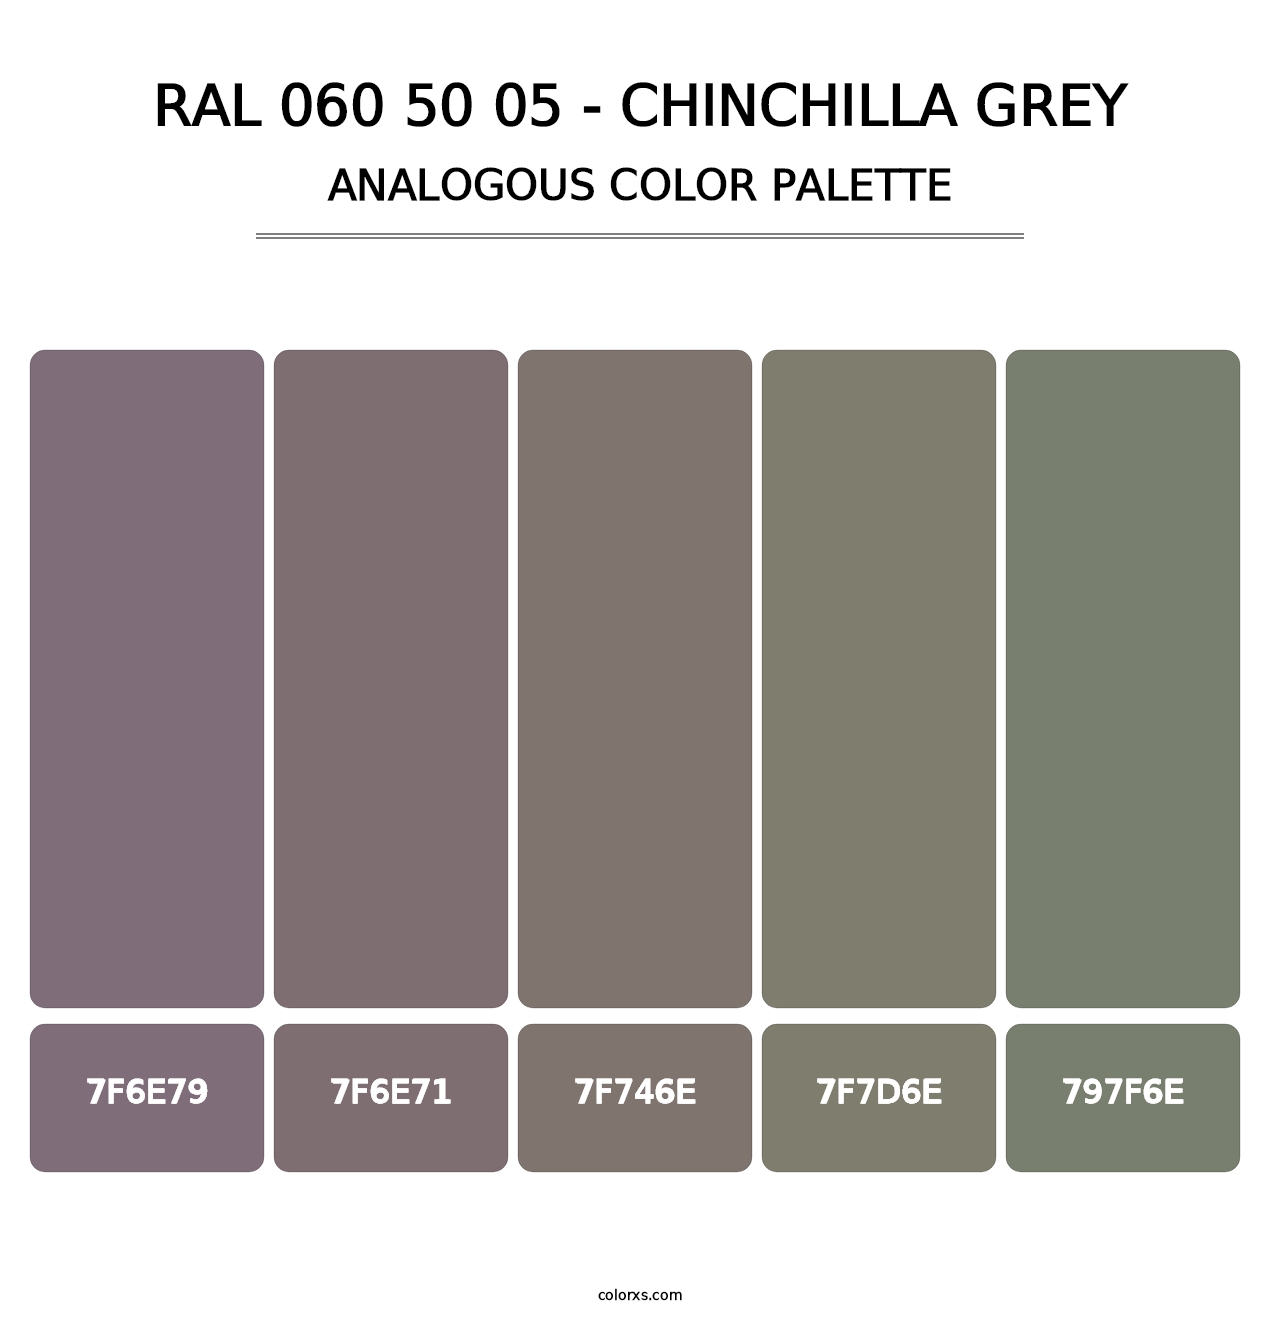 RAL 060 50 05 - Chinchilla Grey - Analogous Color Palette